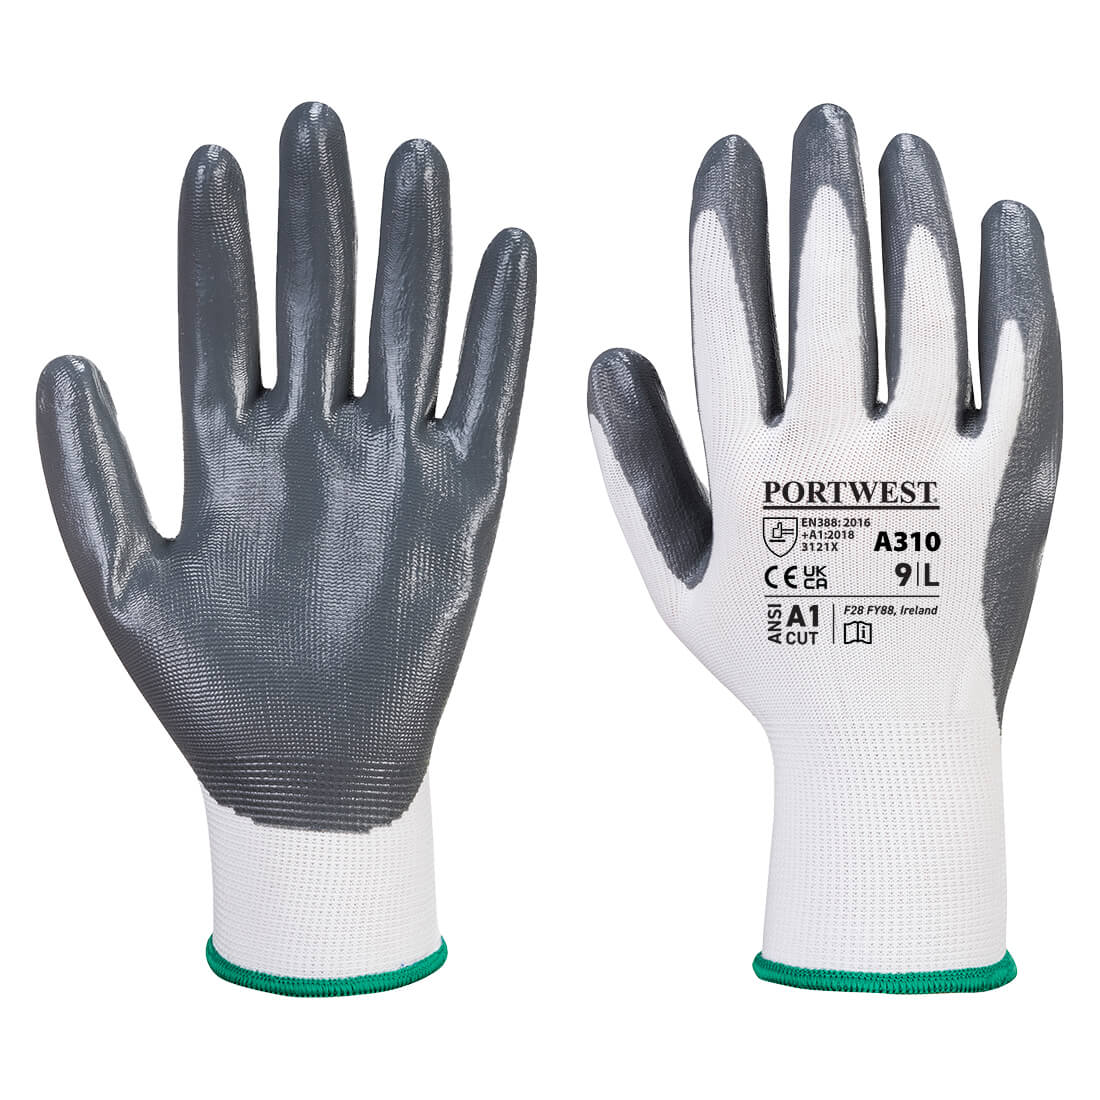 Flexo Grip Nitrile Glove - Grey/White